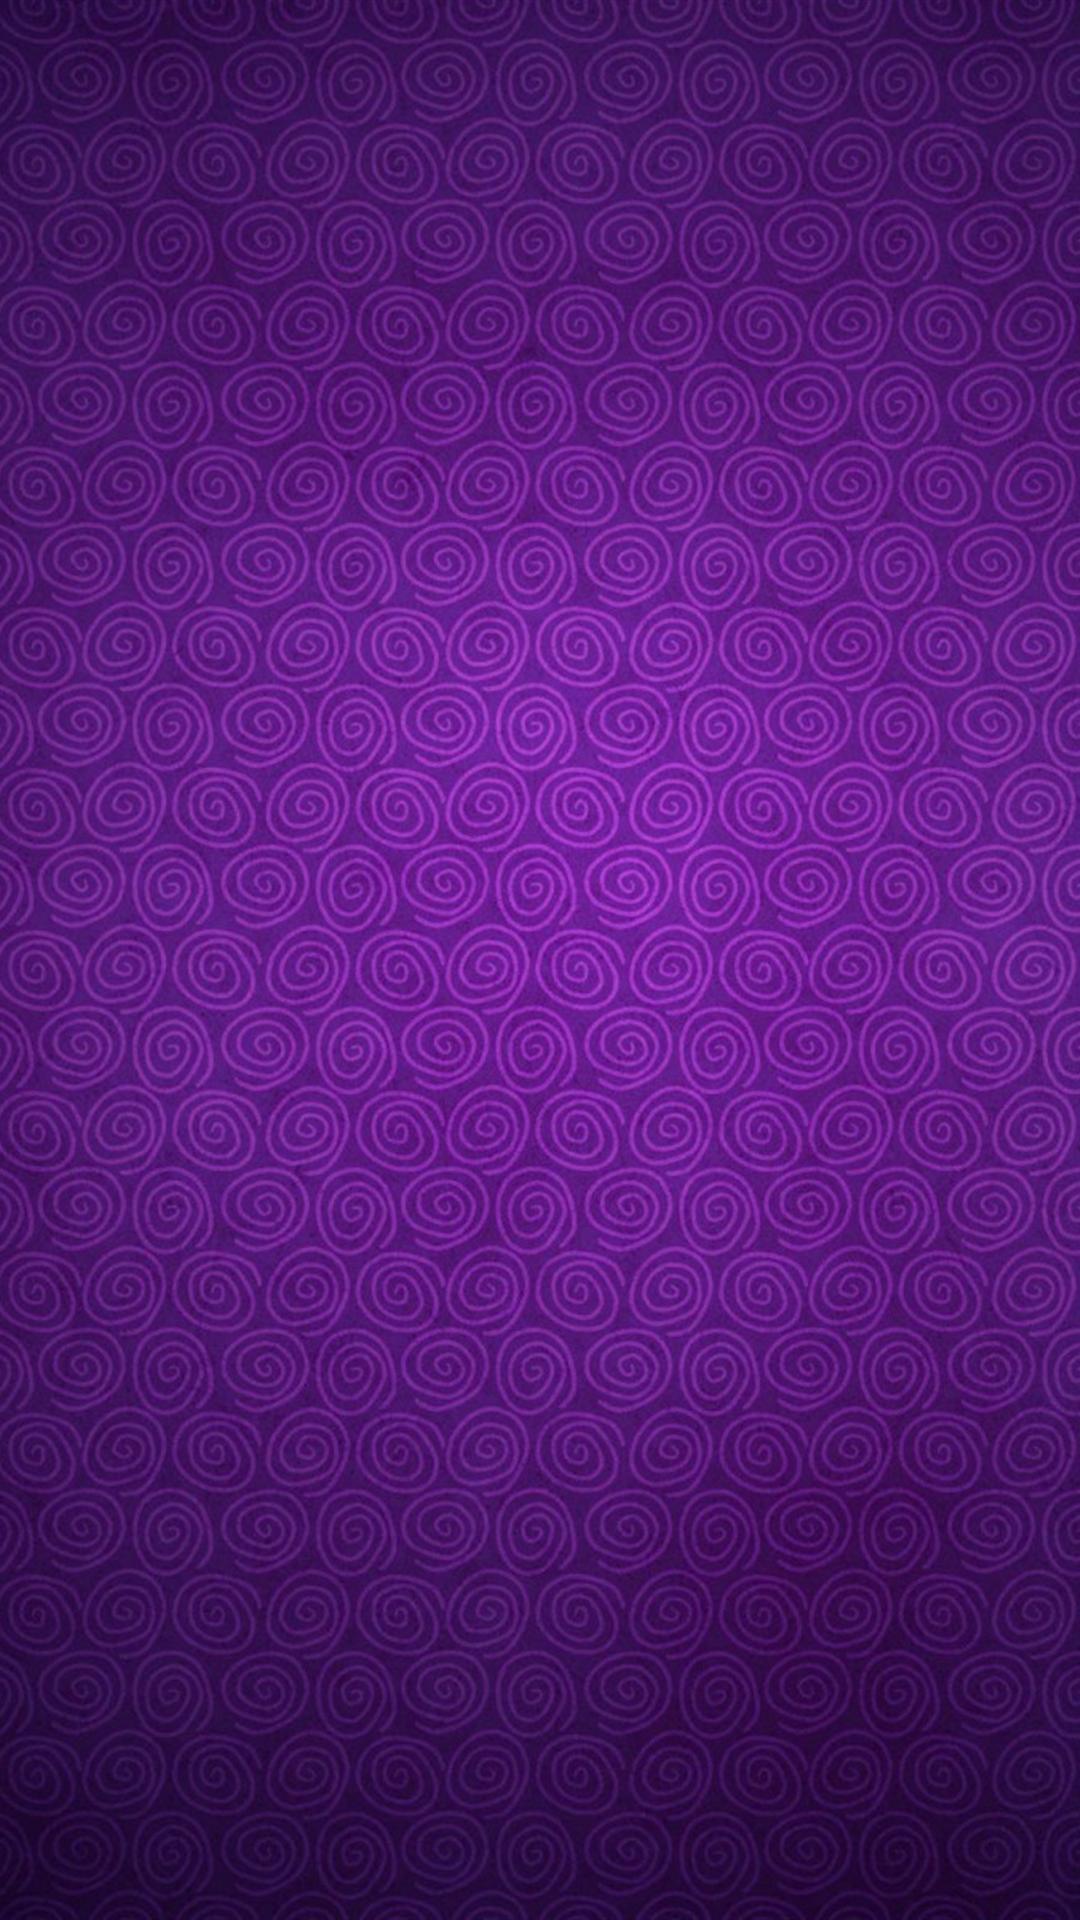 Wallpaper.wiki Purple Wallpaper Mobile Phone HD Free Image PIC